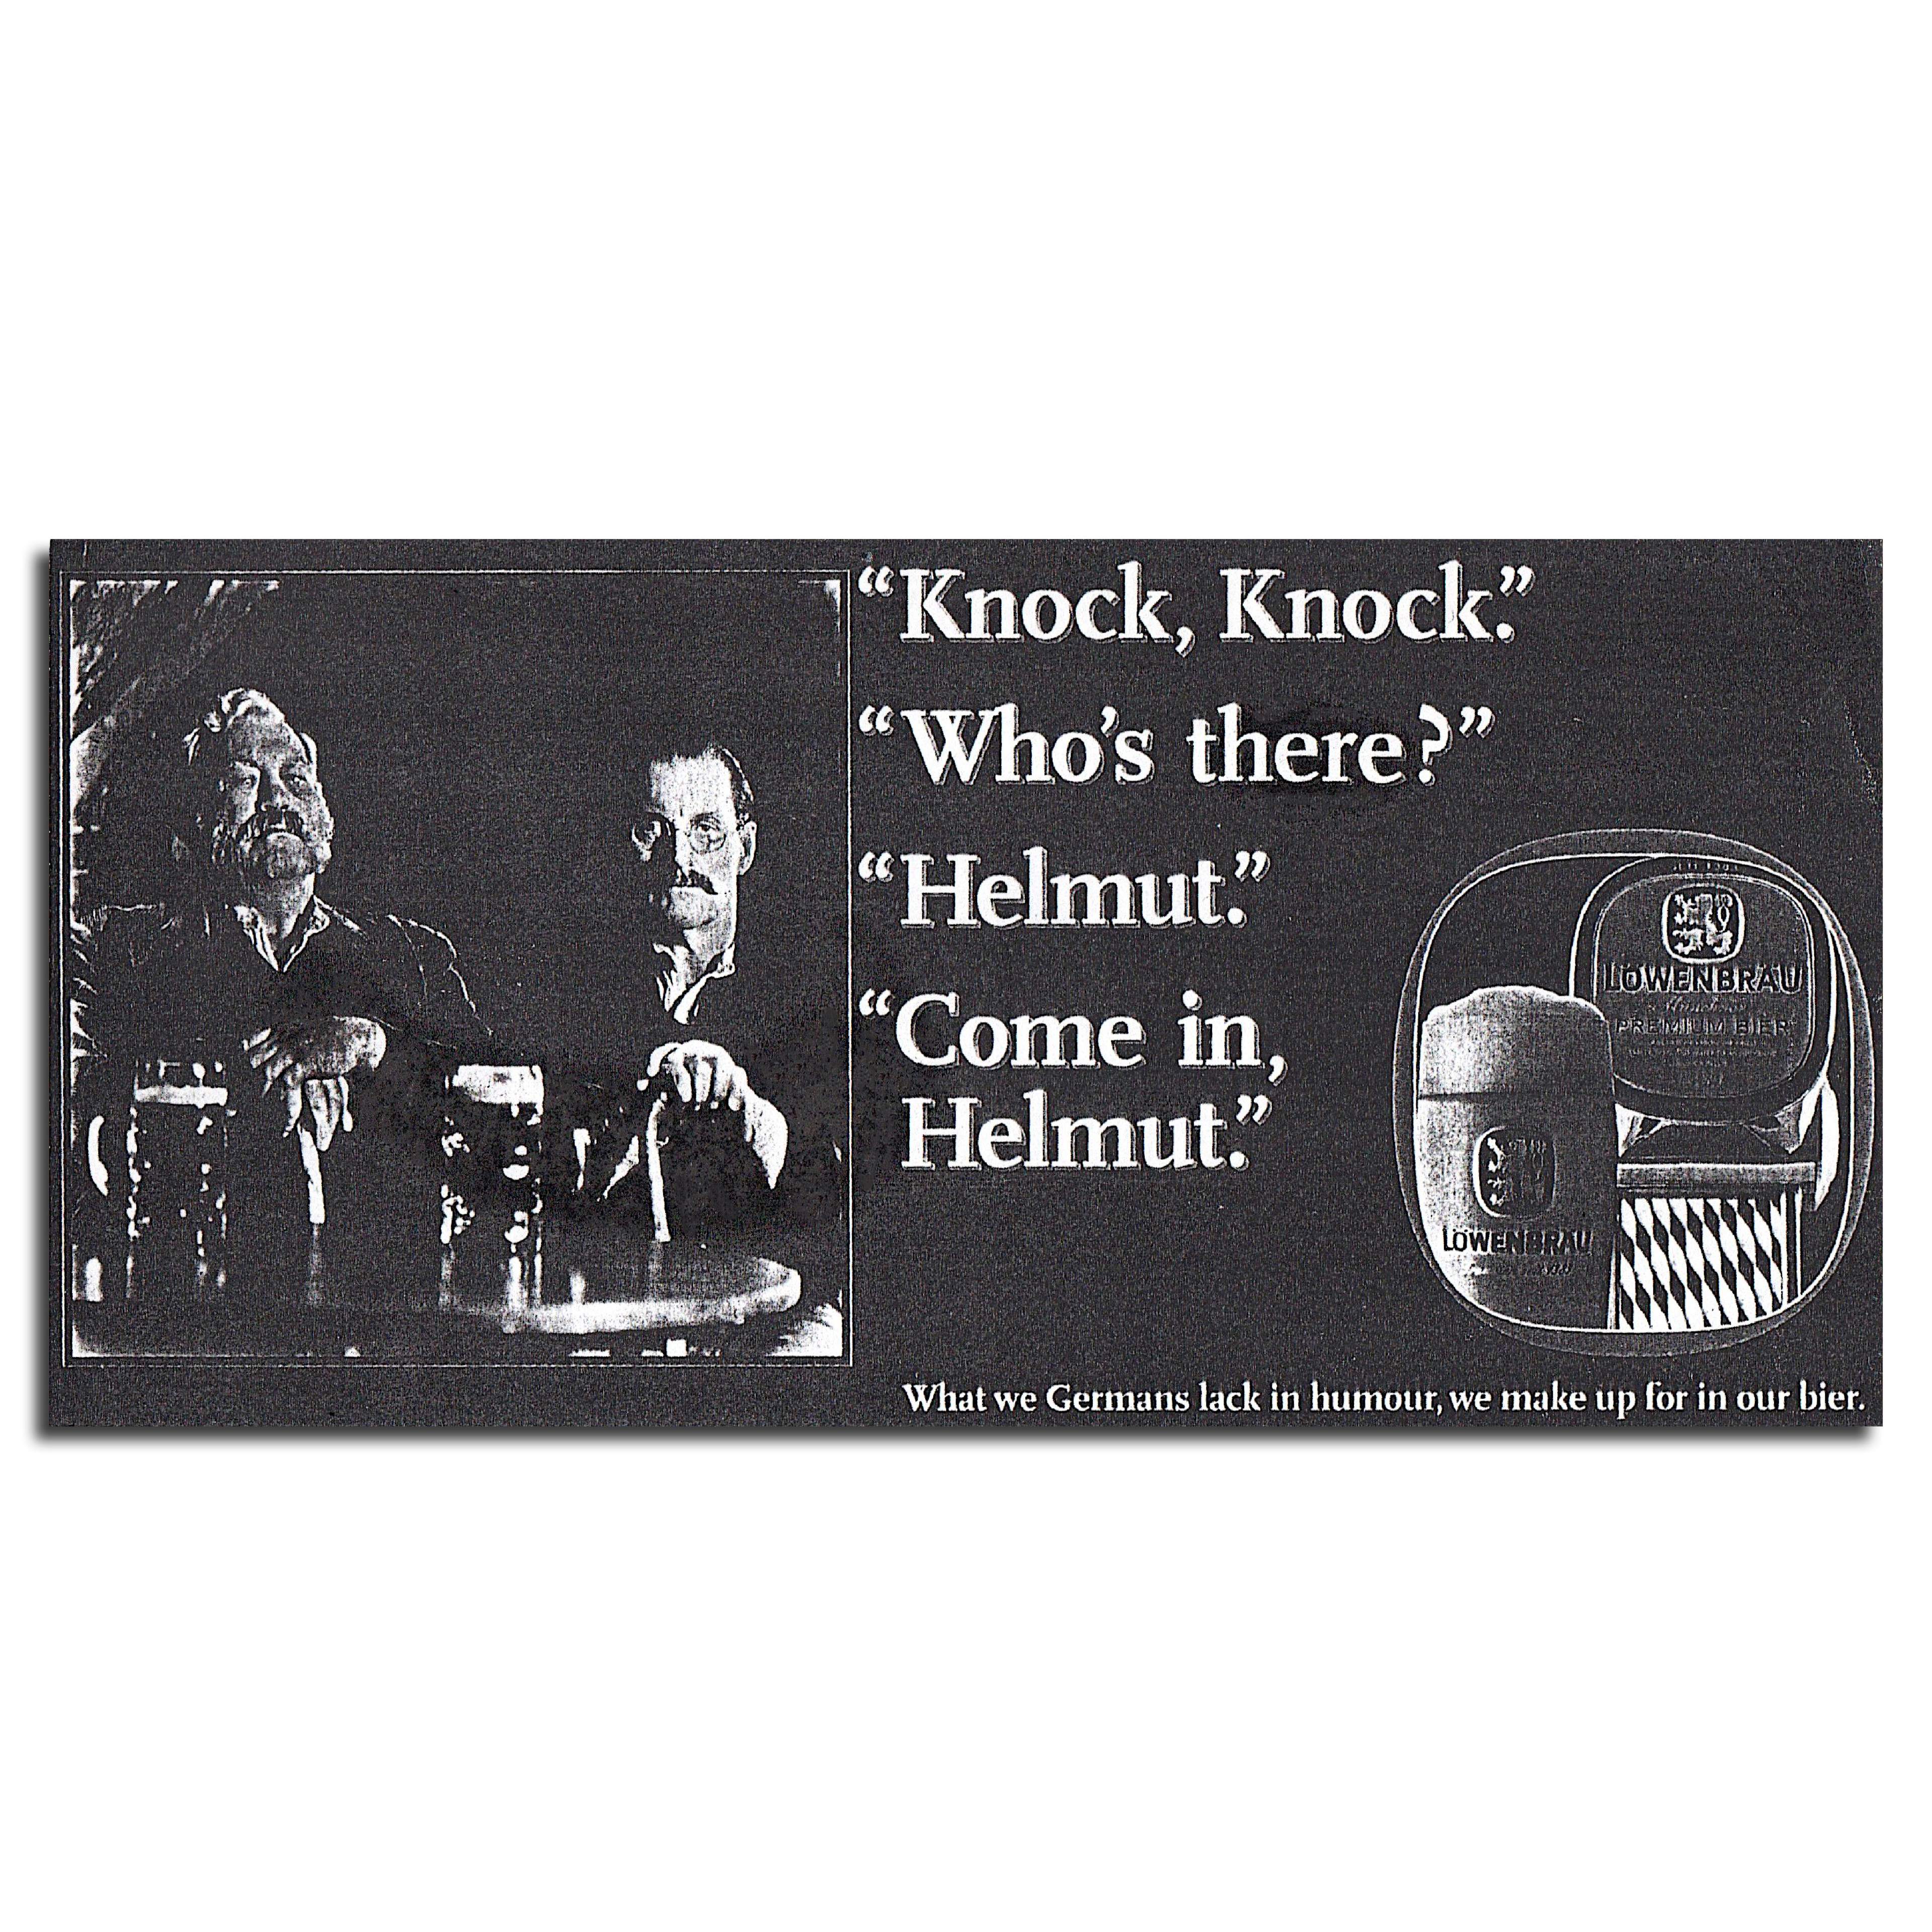 Two German men sitting together in a bar telling a knock, knock joke. 